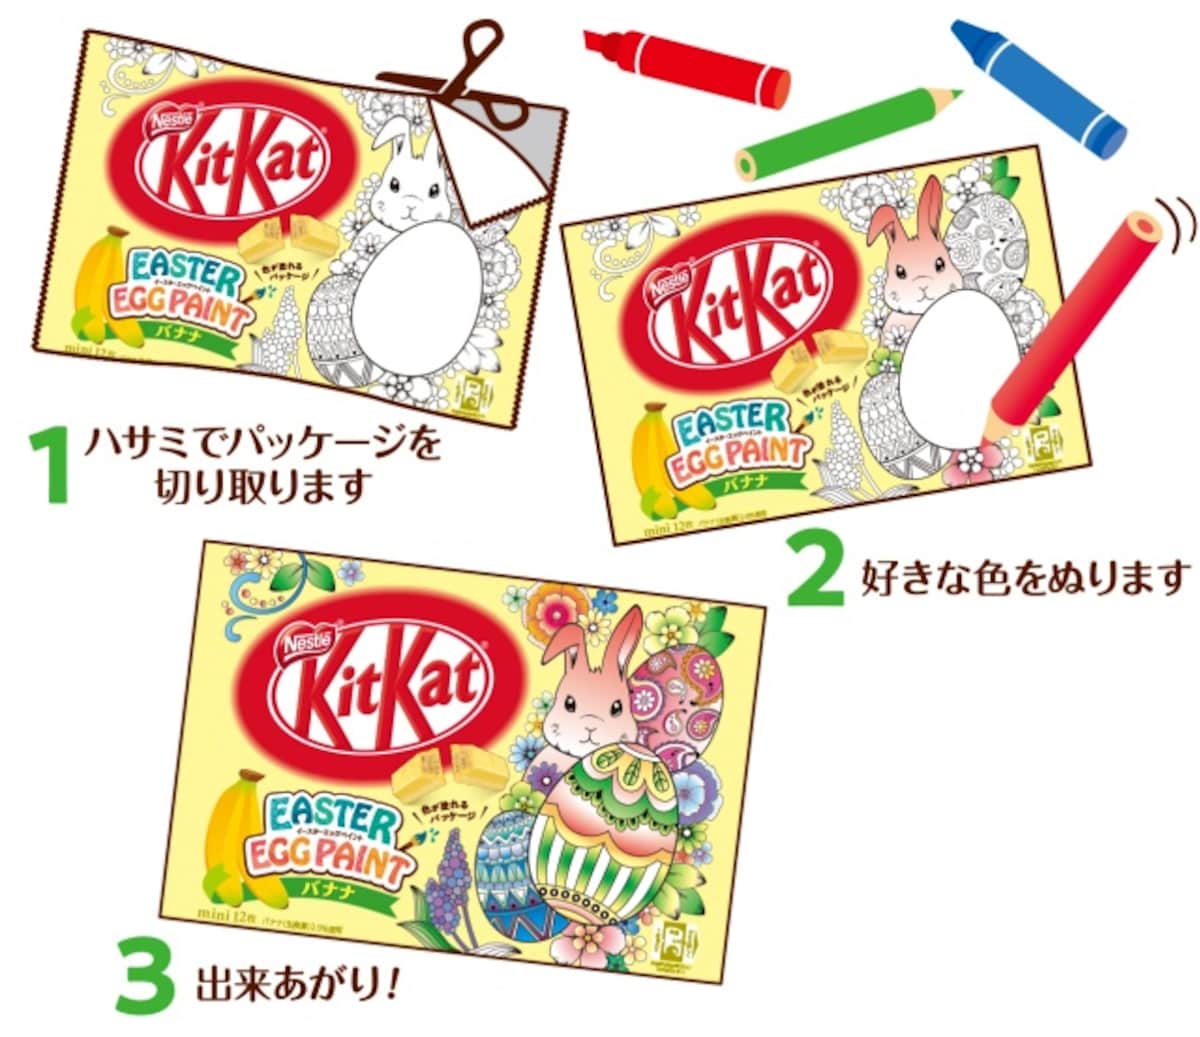 Nestle Japanese Kit Kat Sakura Mochi Cherry Blossom Limited